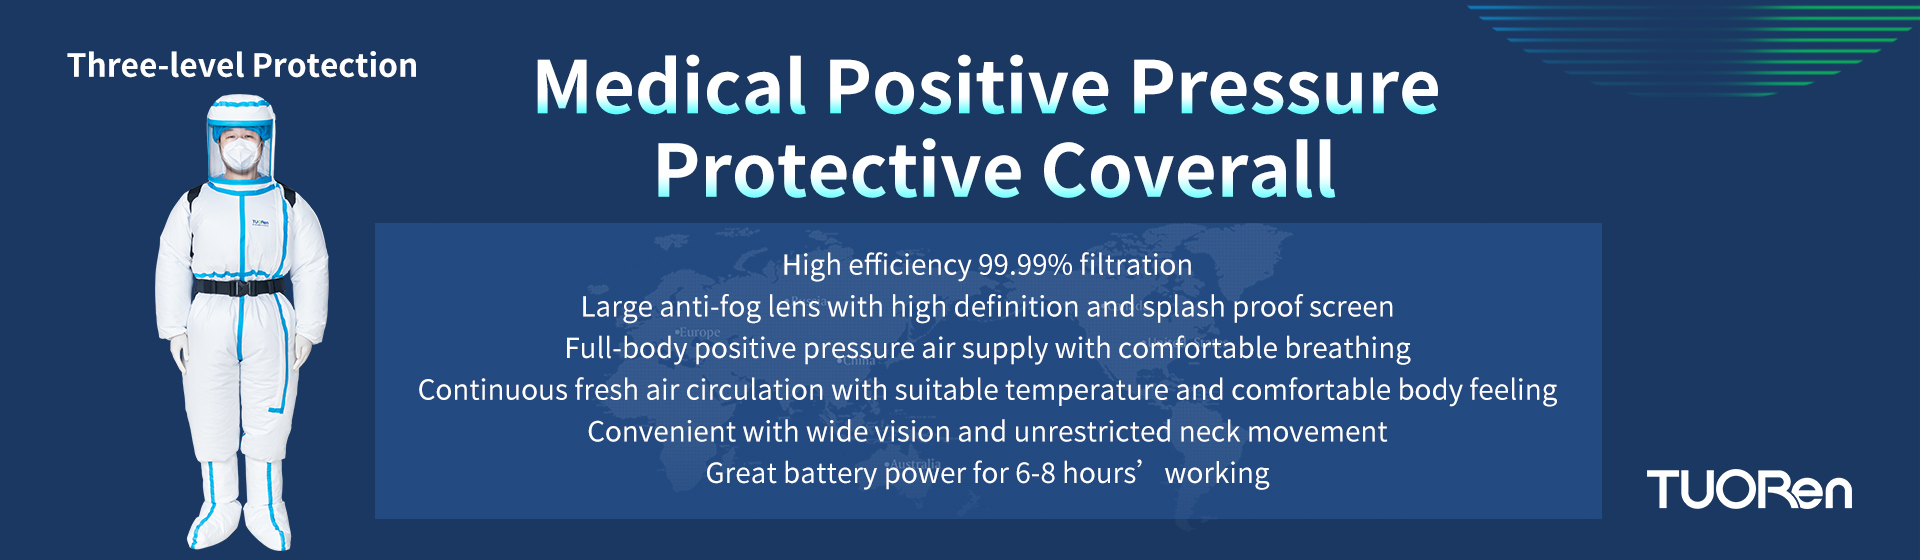 Medical Positive Pressure Prot